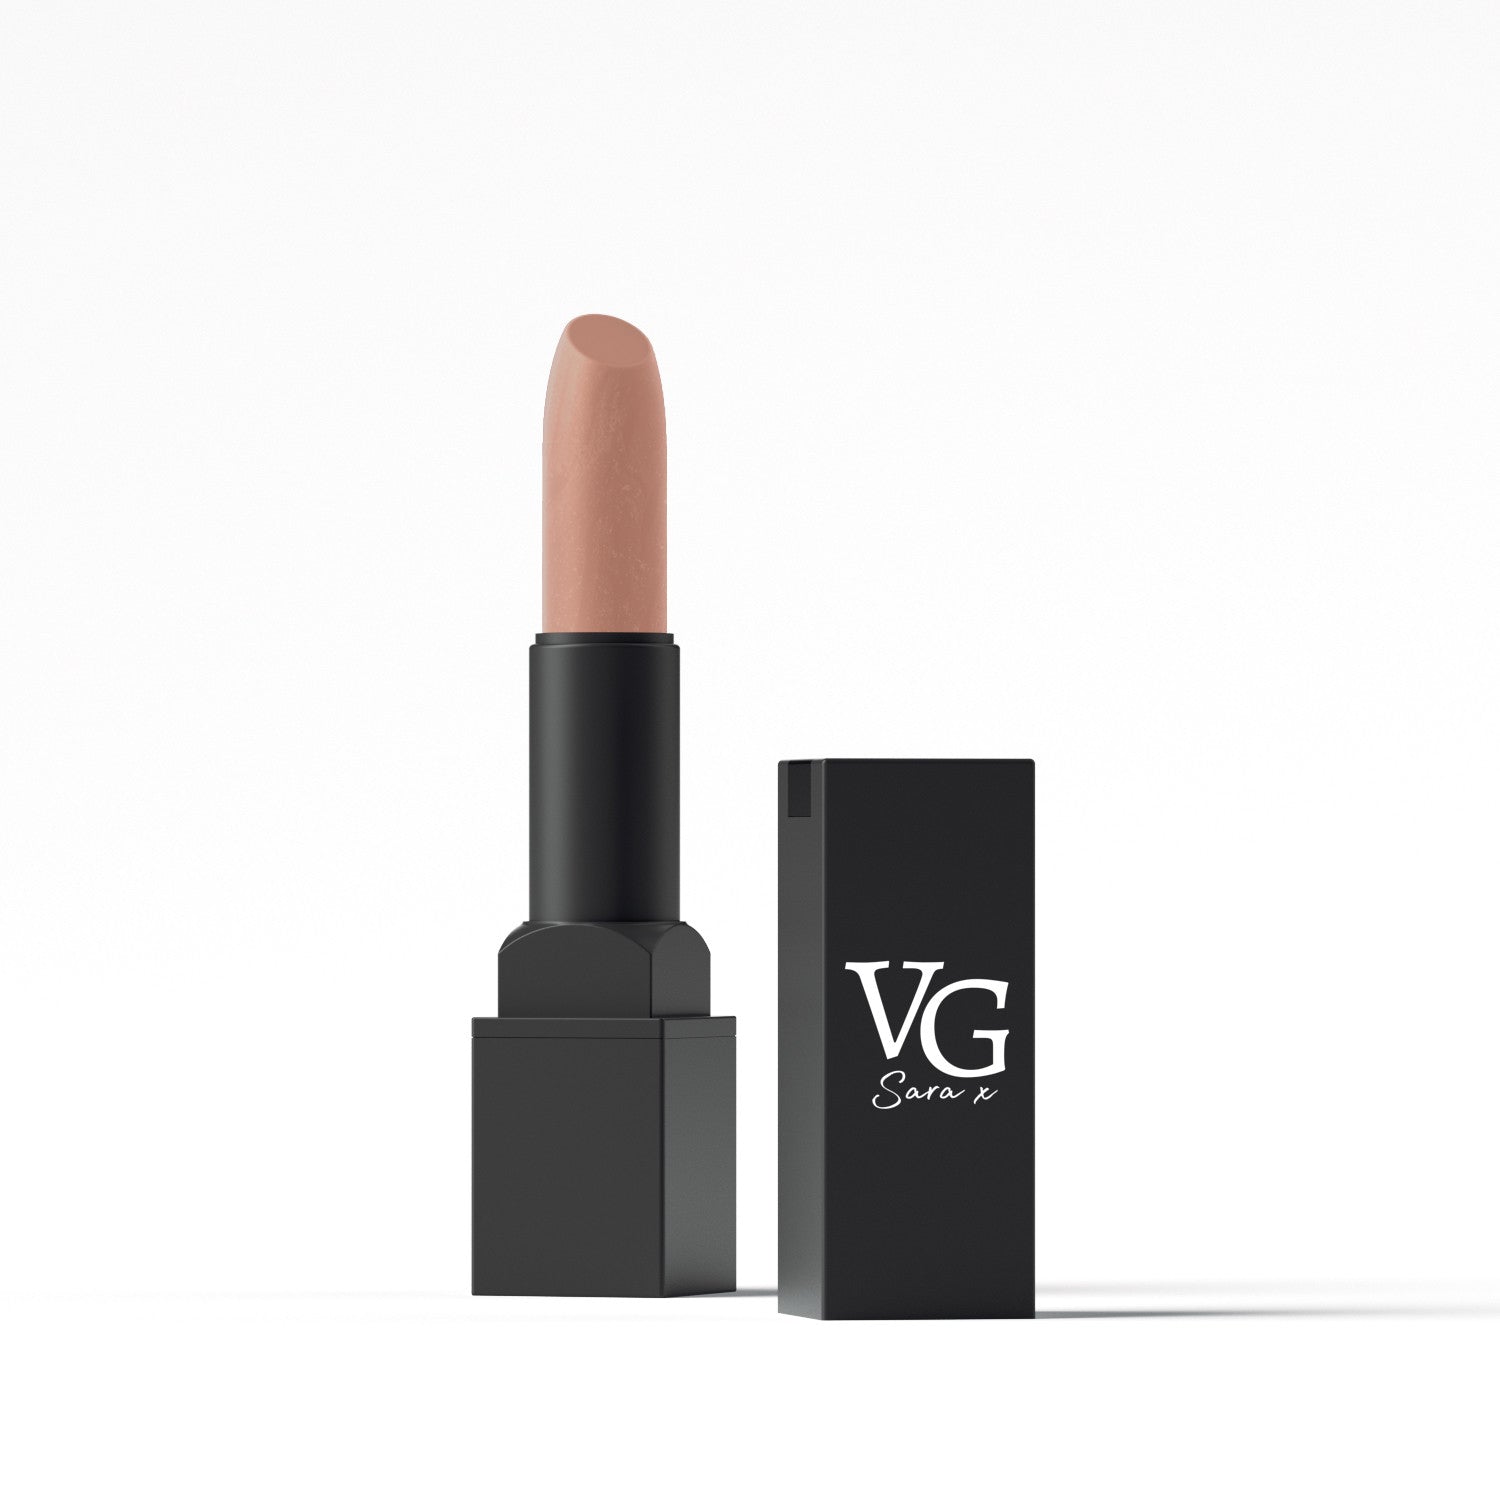 Mocha Latte shade VG lipstick with black box showcasing the product